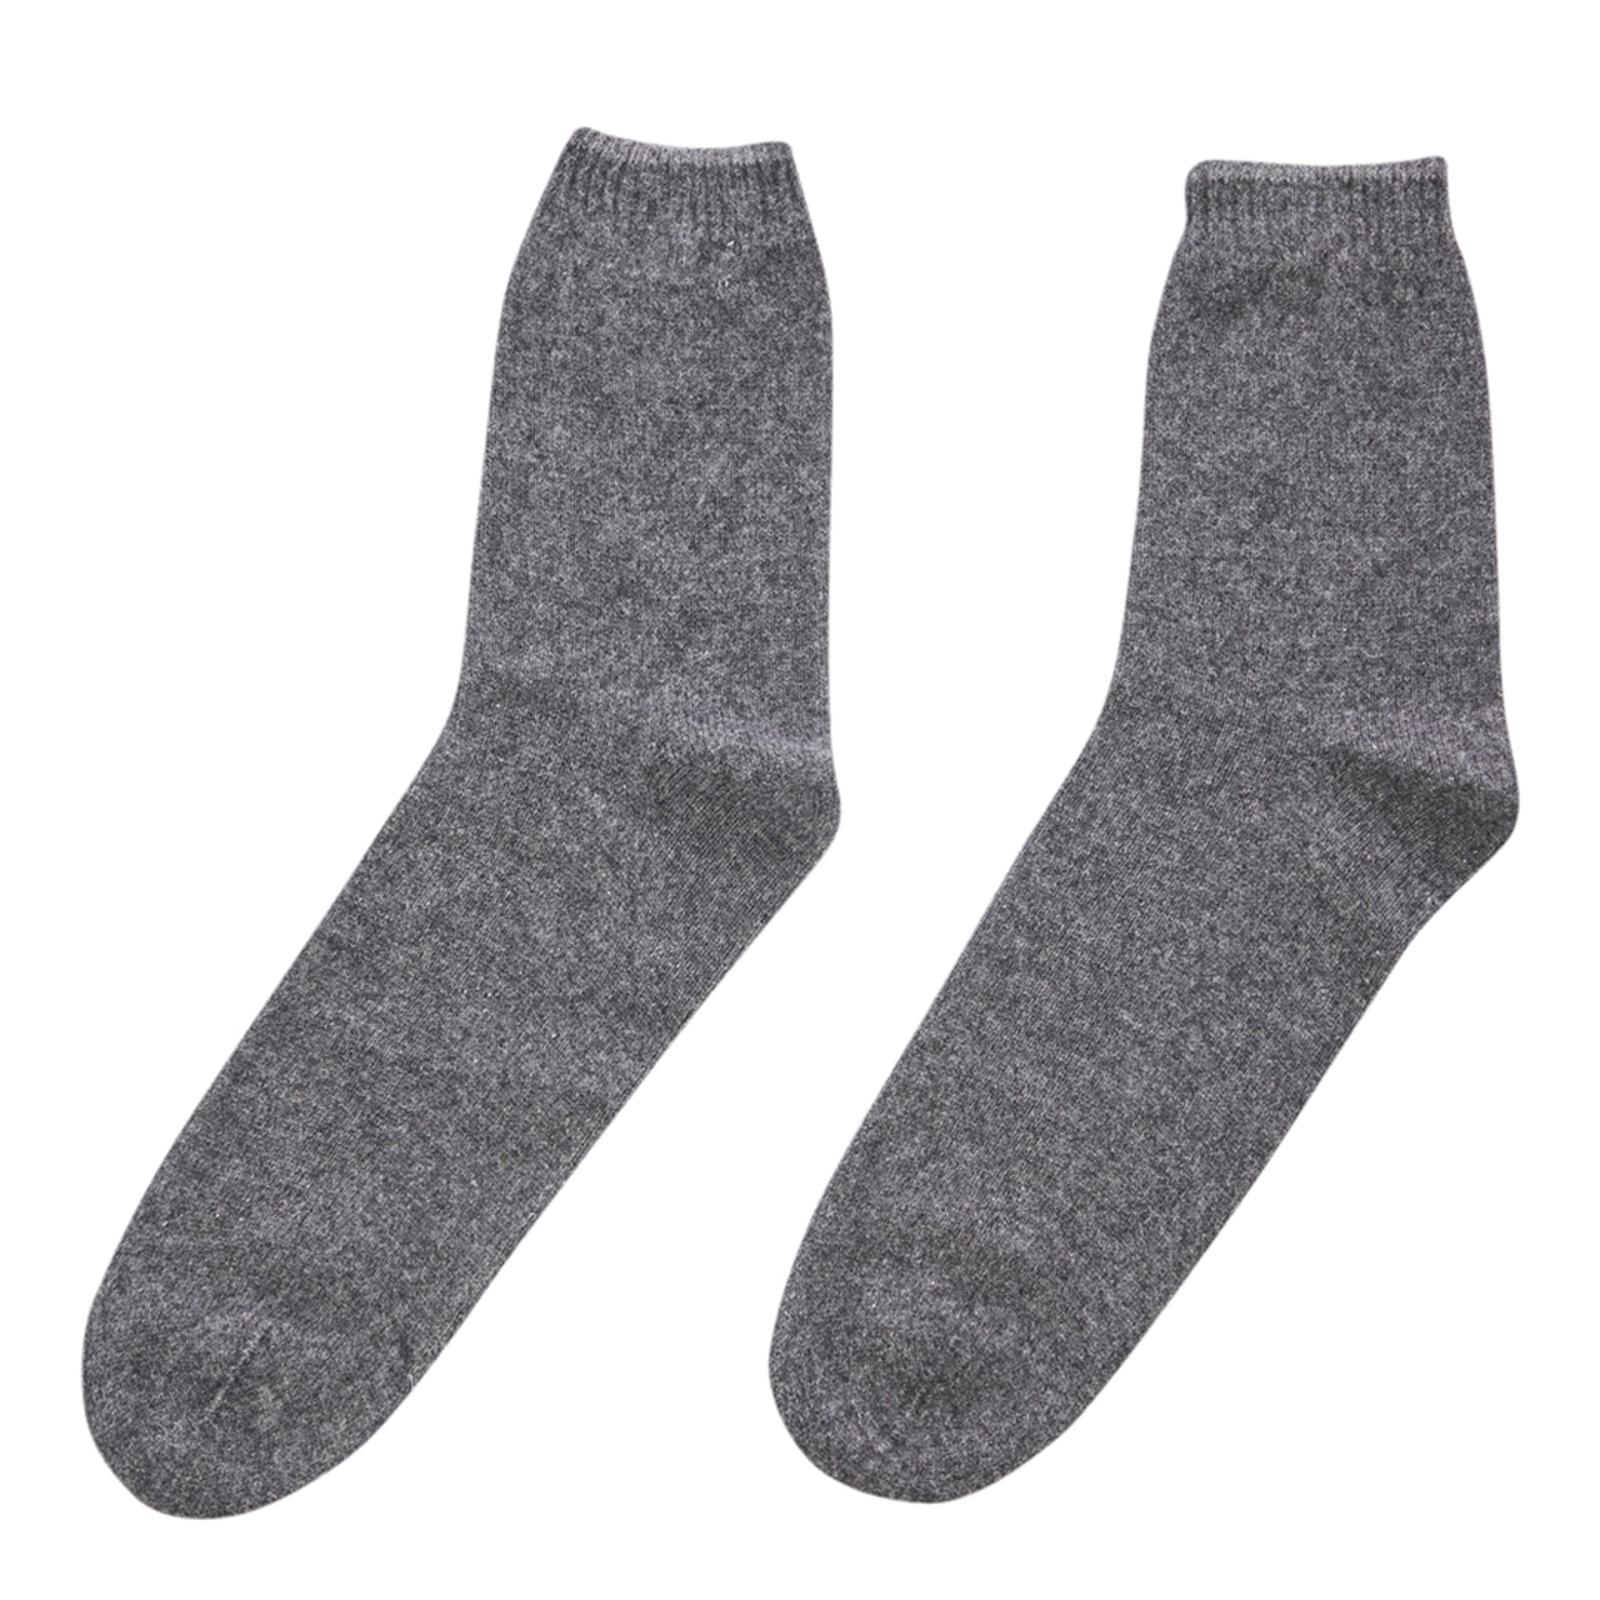 Dark Charcoal Grey Marl Cashmere Socks - BrandAlley